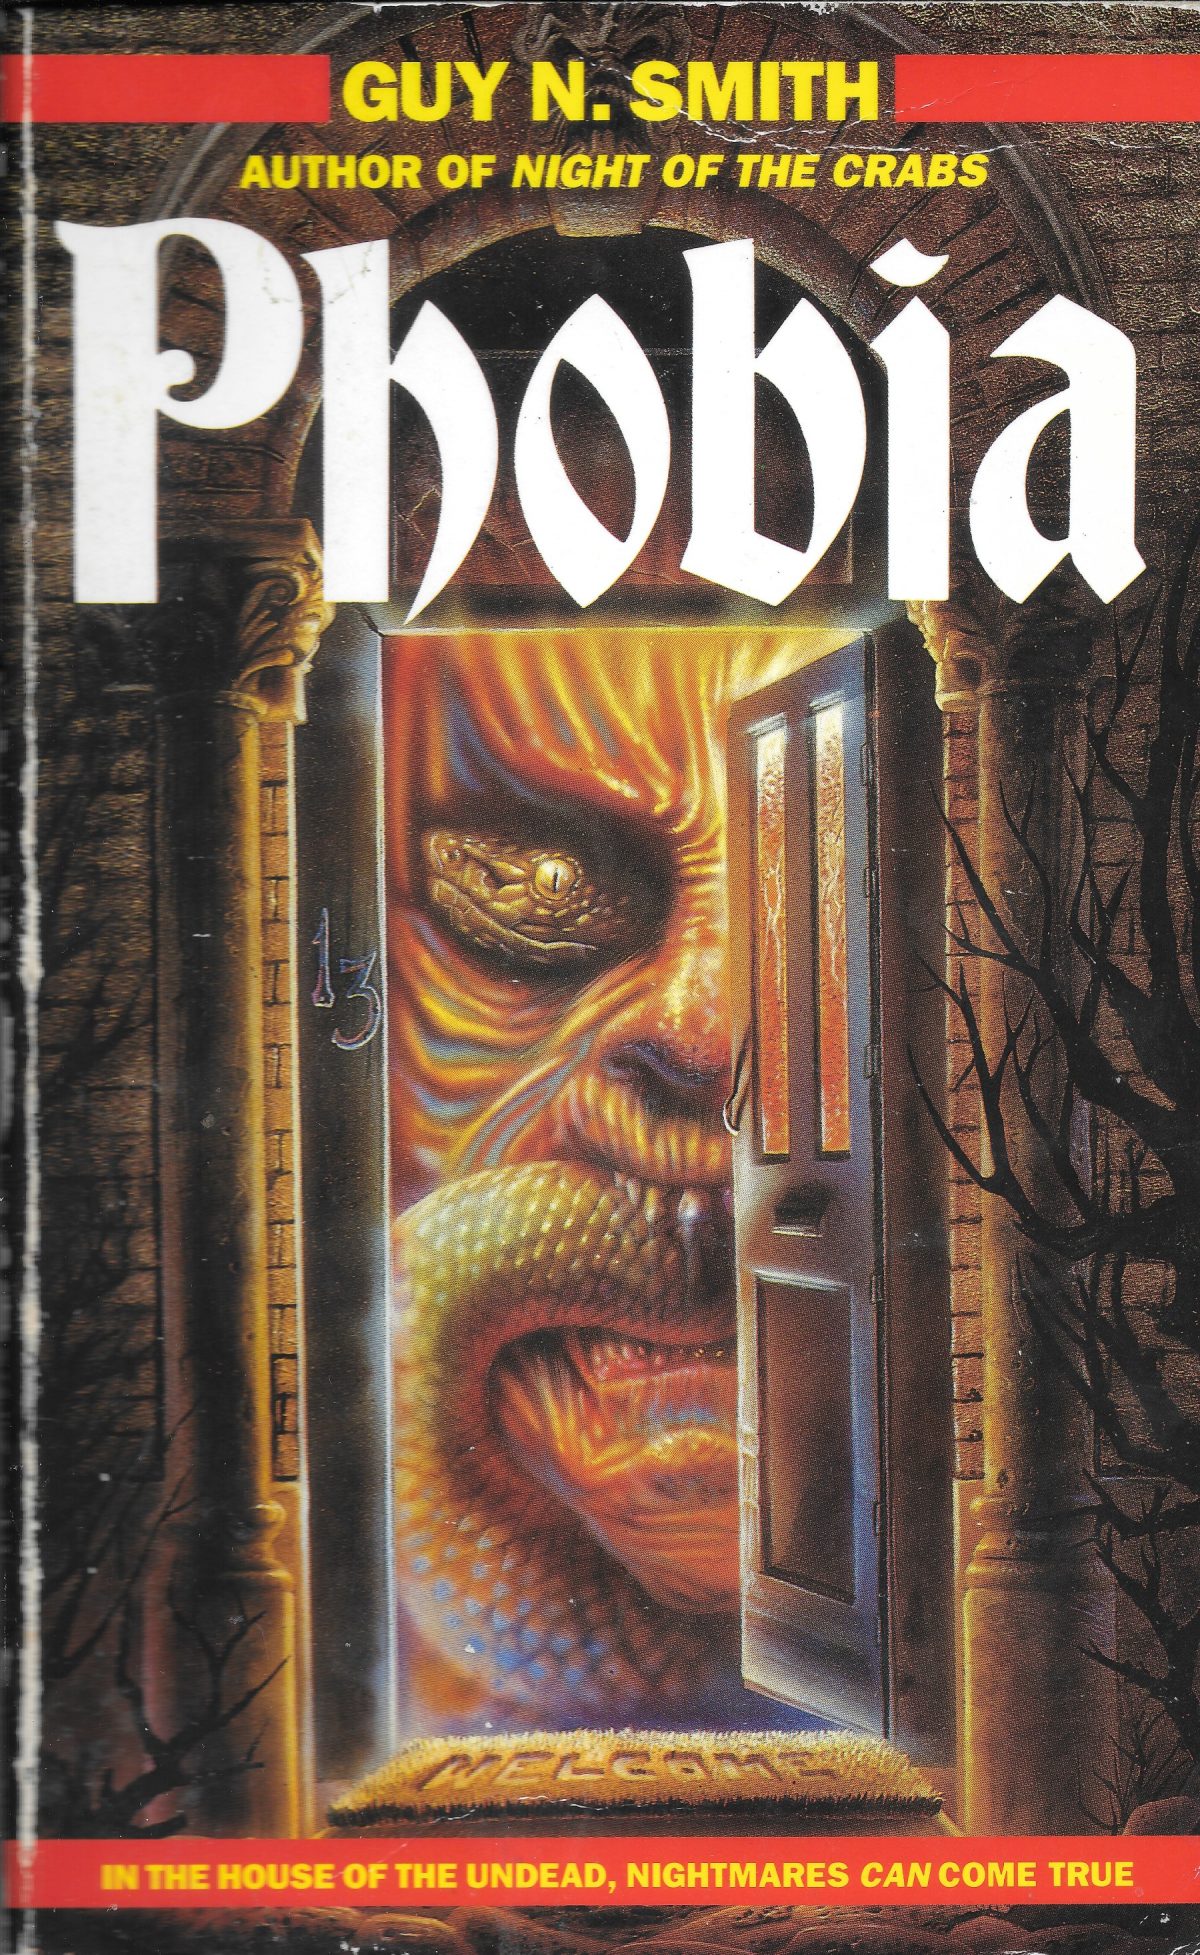 Guy N Smith, horror fictions, horror, books, Phobia